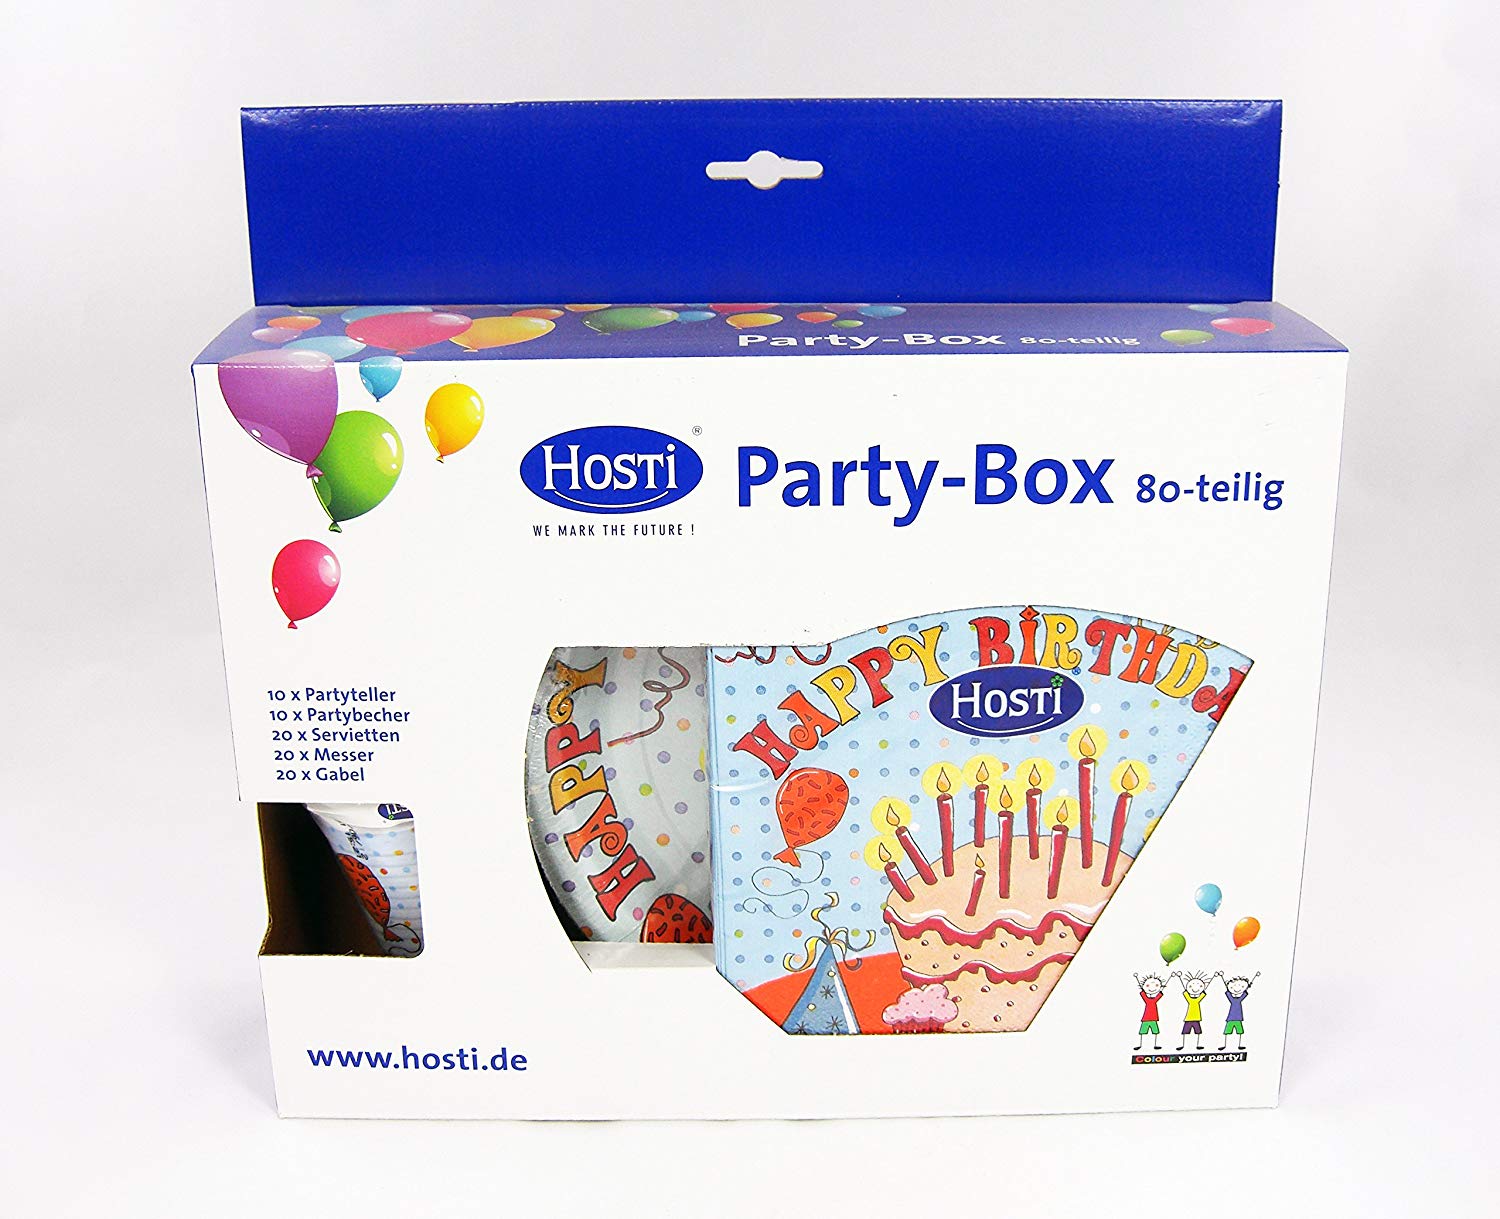 Partybox "Happy Birthday", 80-teilig